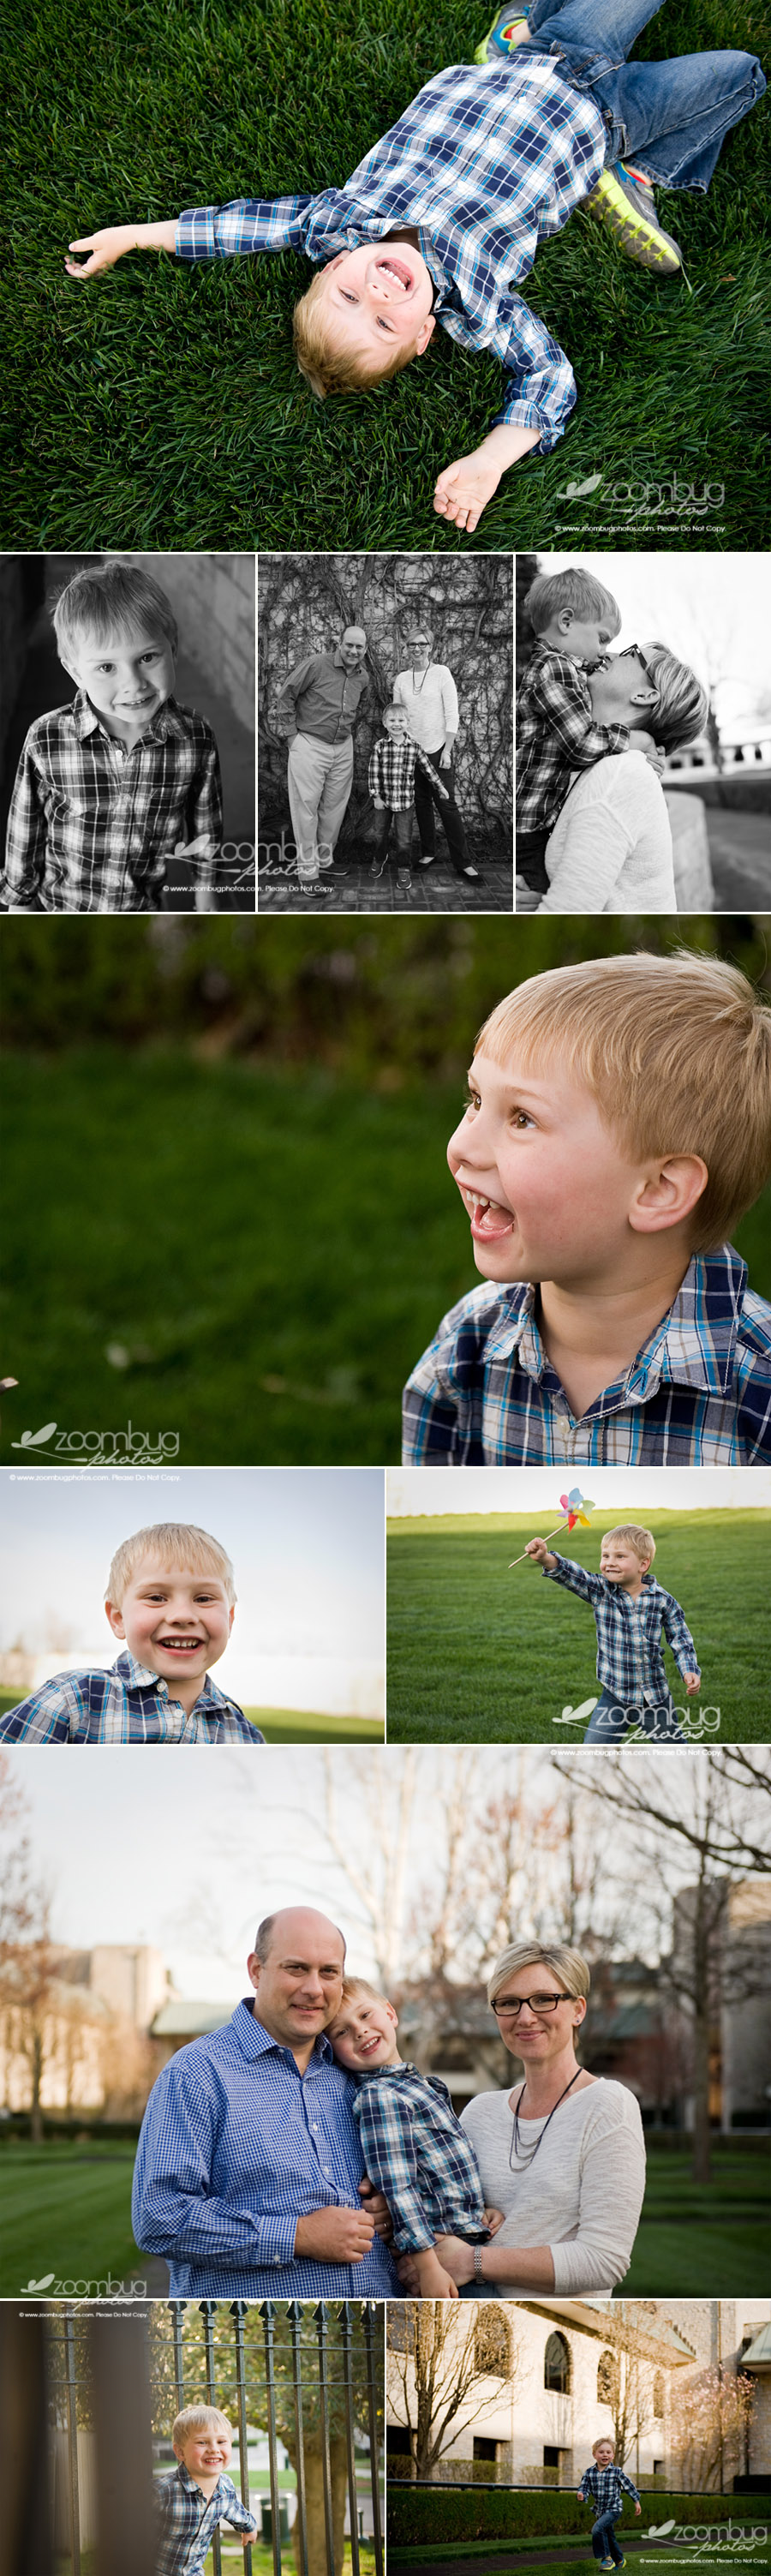 5-years-boy-kindergartener-lexington-child-photograph